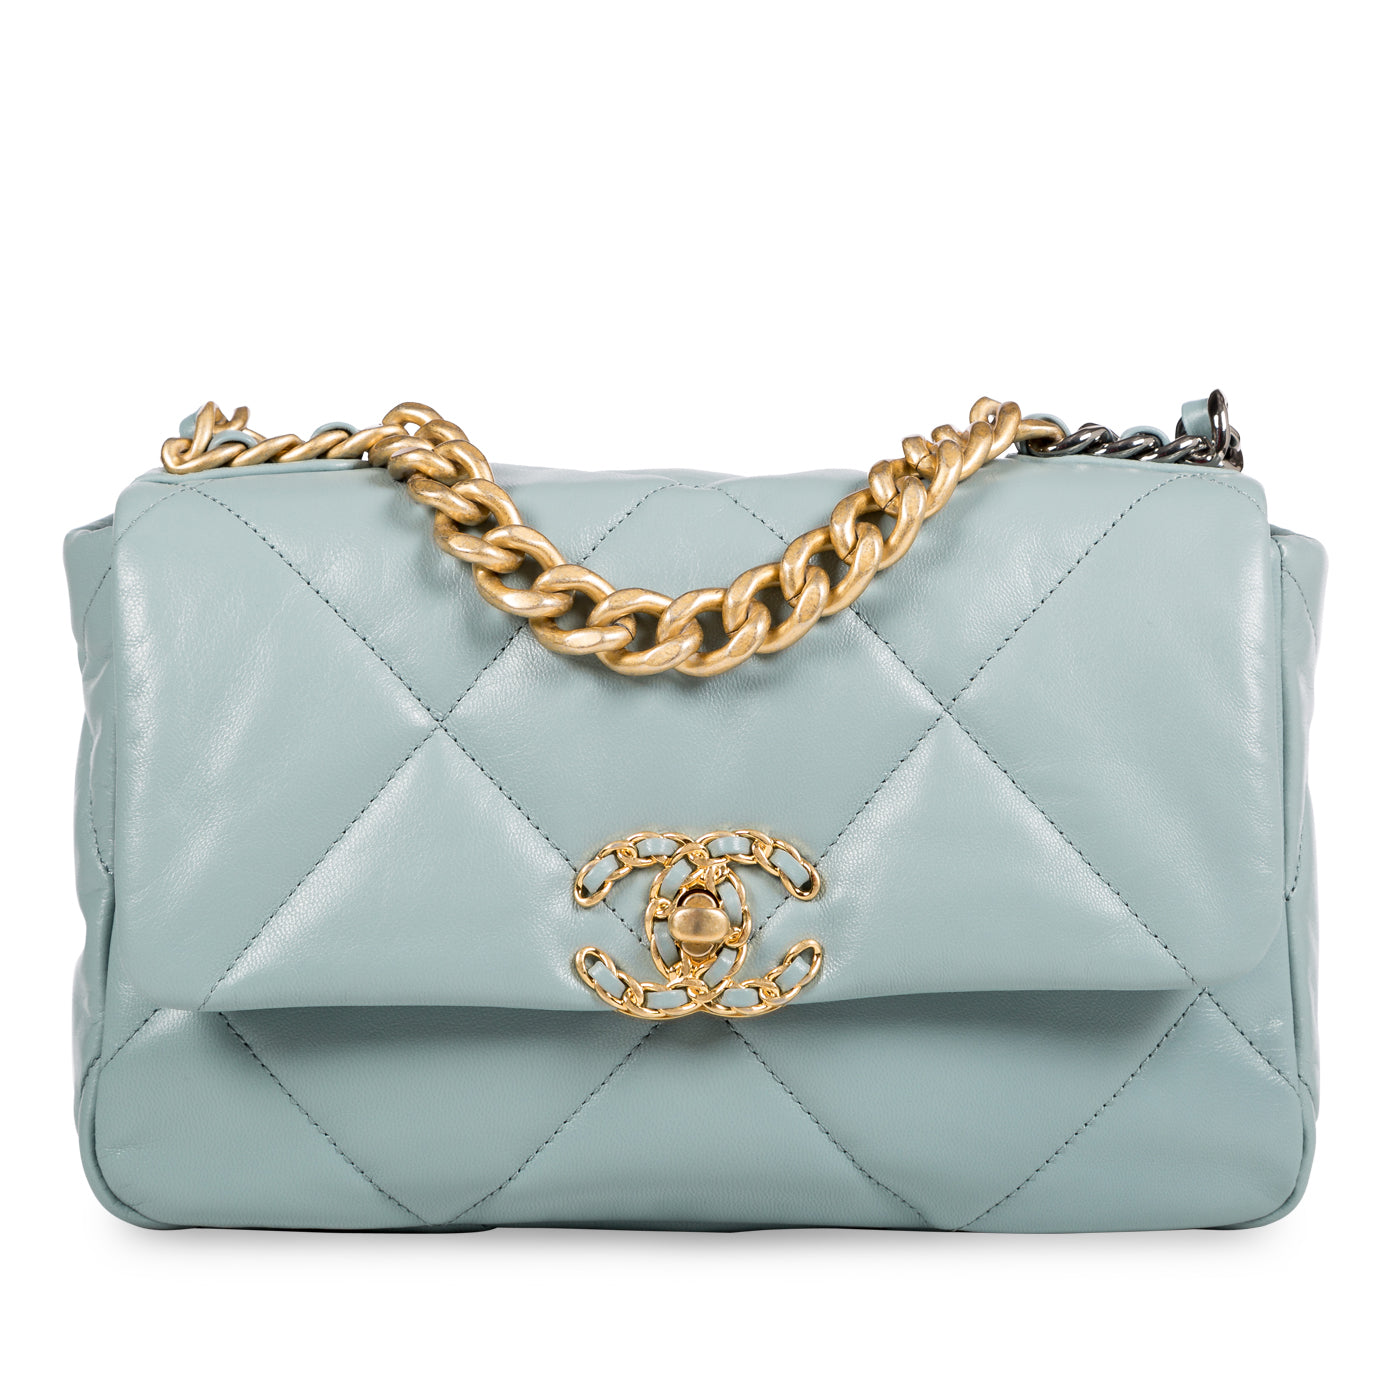 Chanel 19 Blue Flagbag Small  Bags, Chanel 19 bag, Chanel handbags